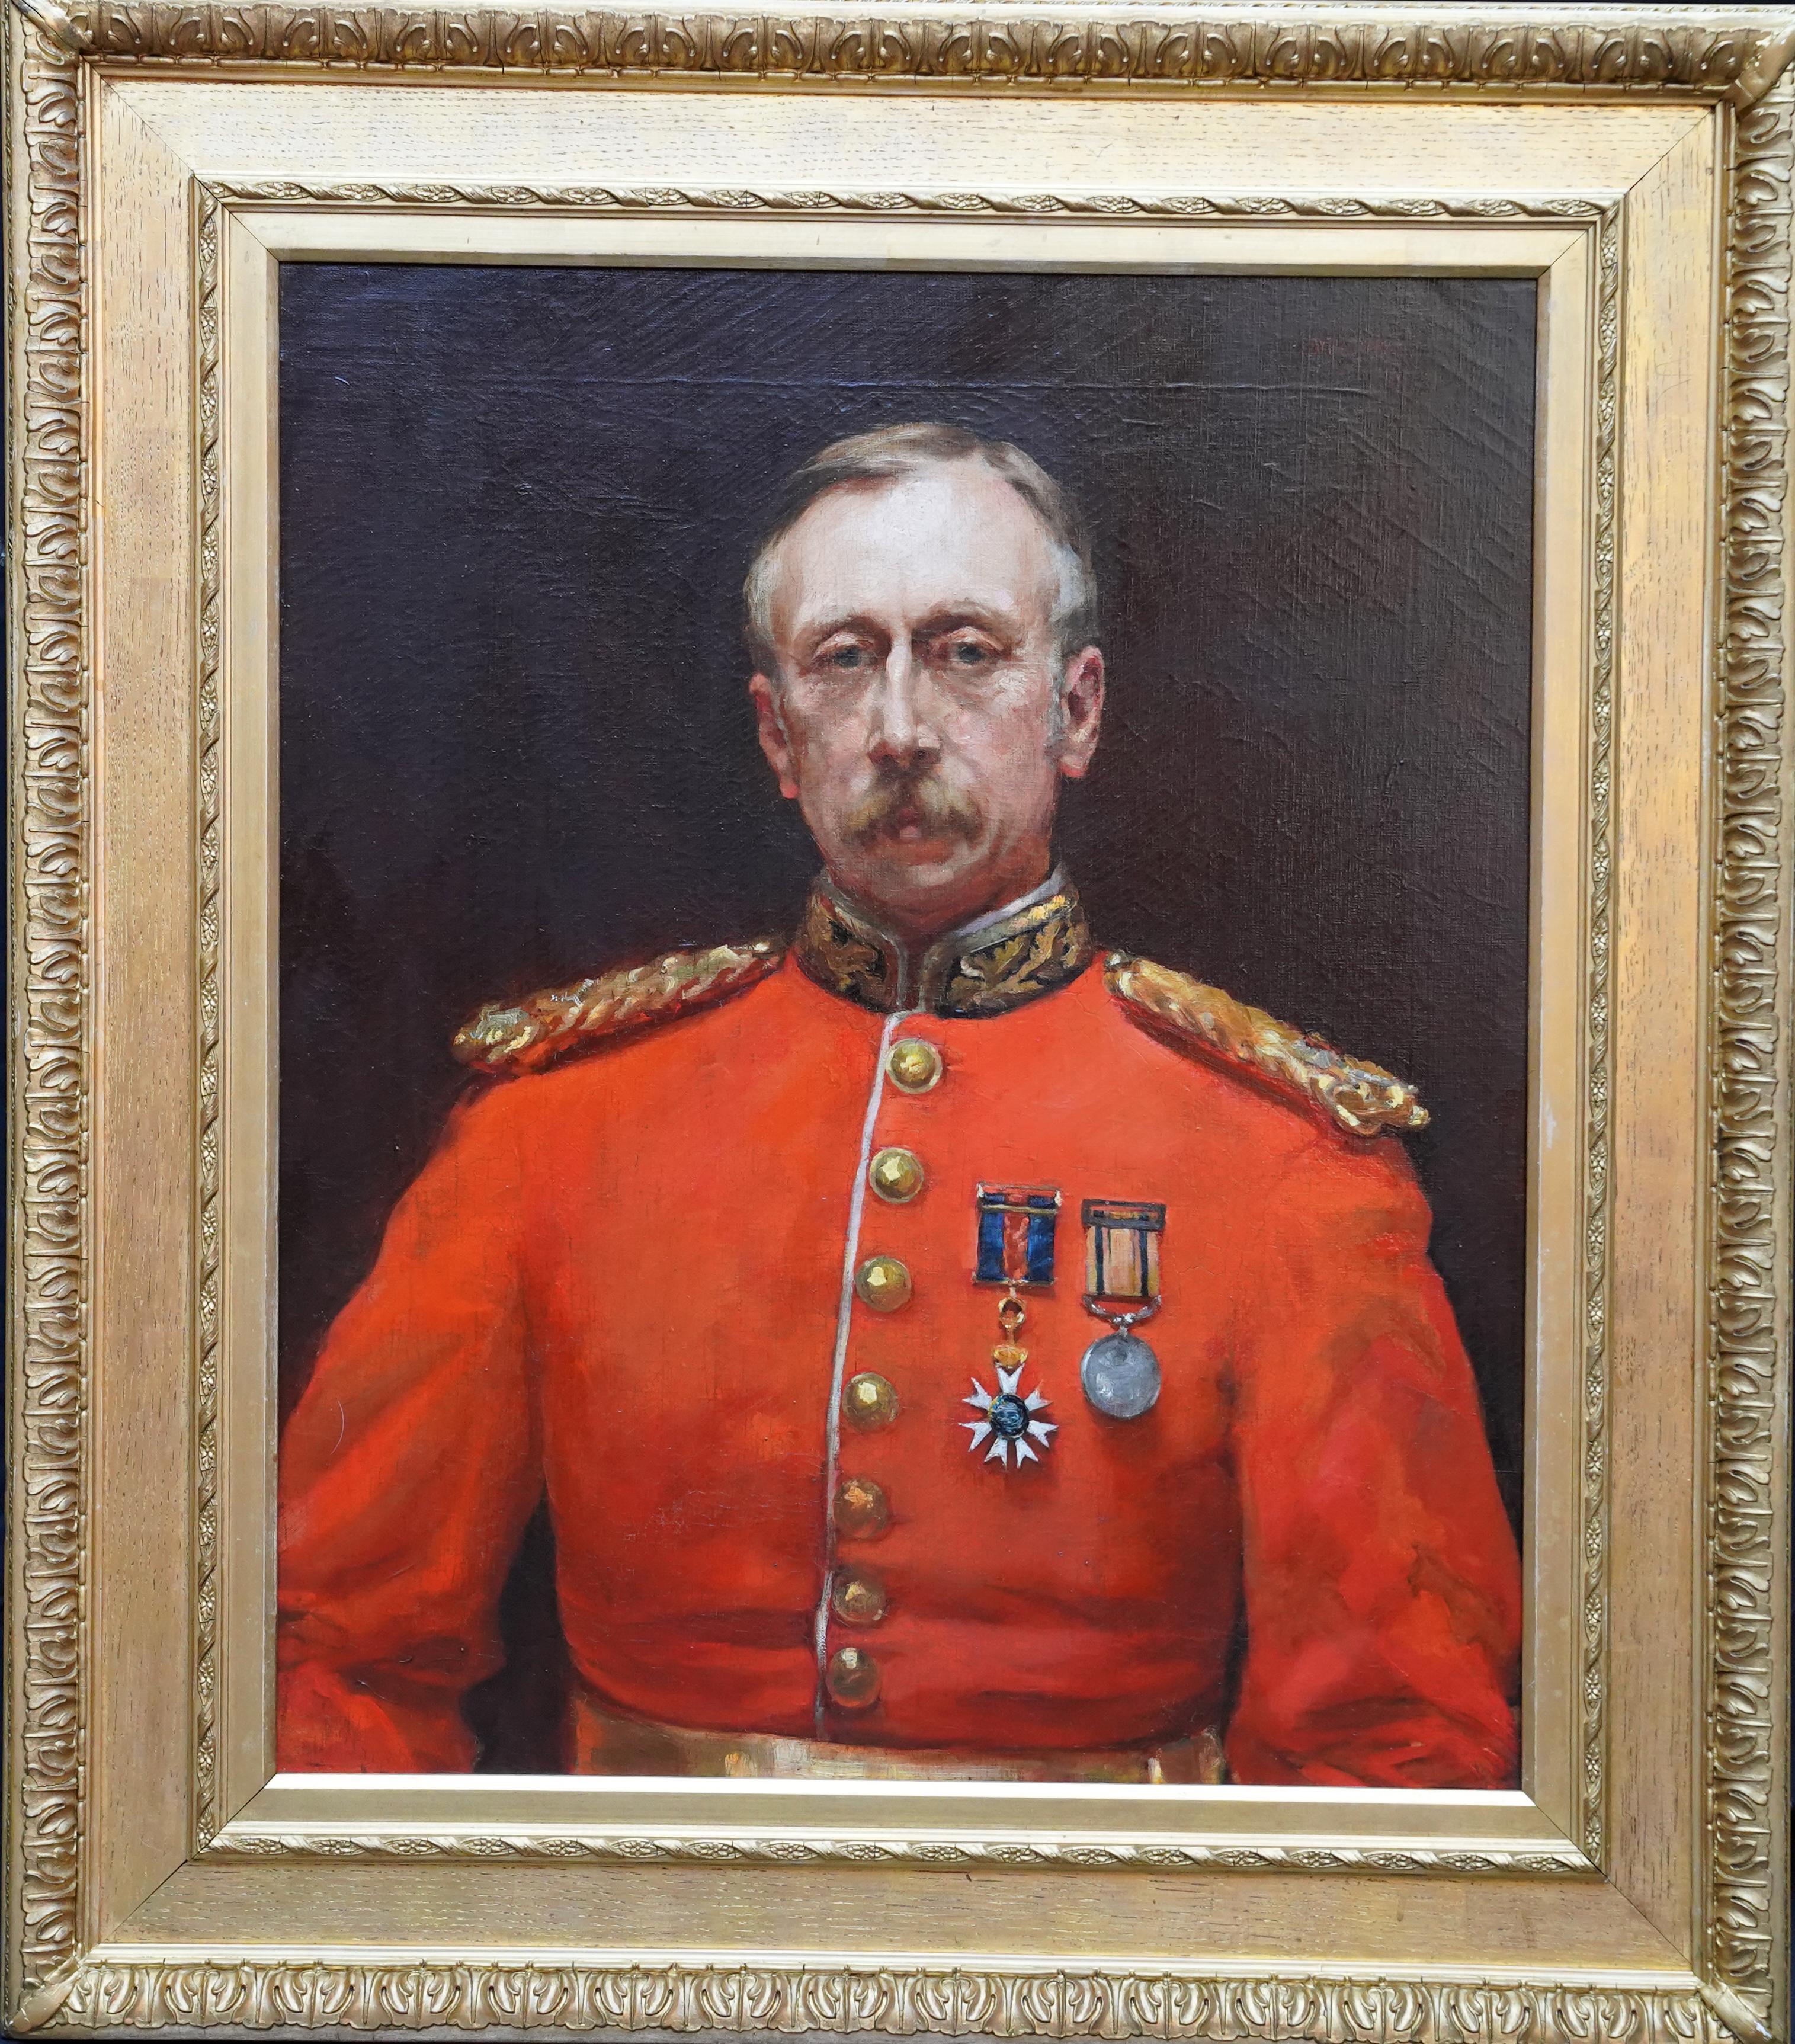 Edyth Starkie Portrait Painting - Portrait of Major General Harding Steward - British 19thC military oil painting